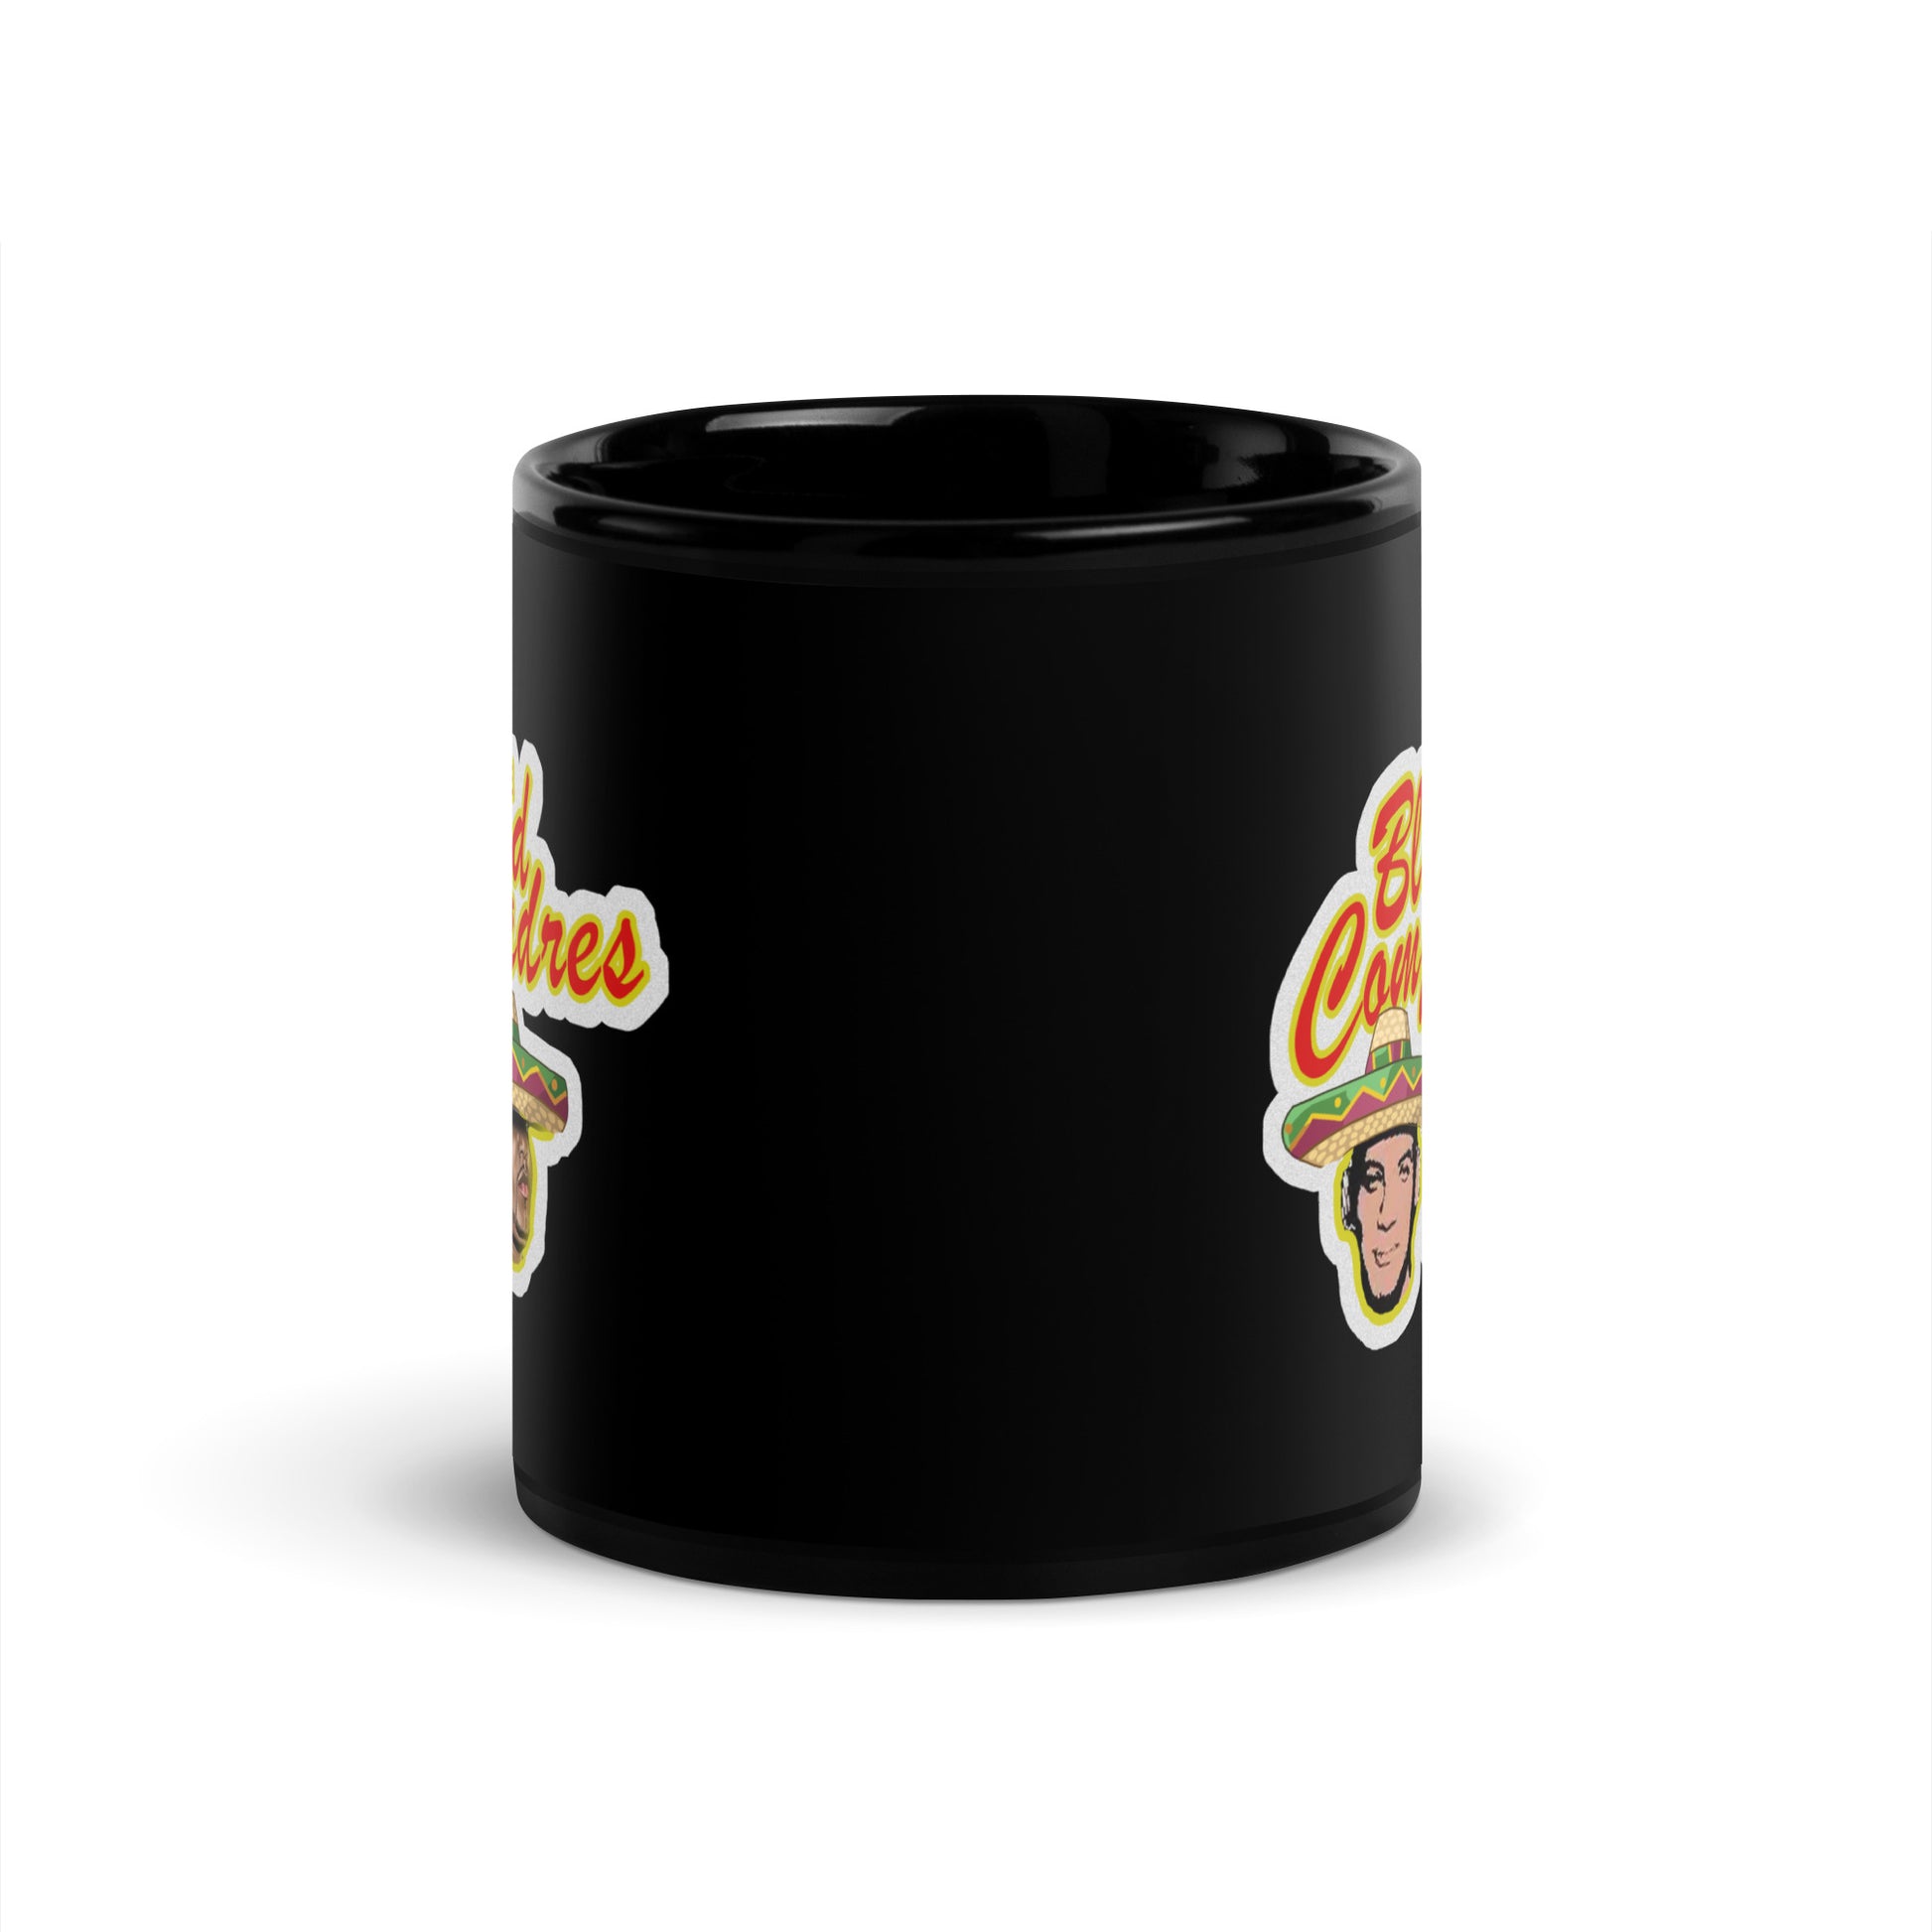 The Blend Compdres Black Glossy Mug - Another Bodega